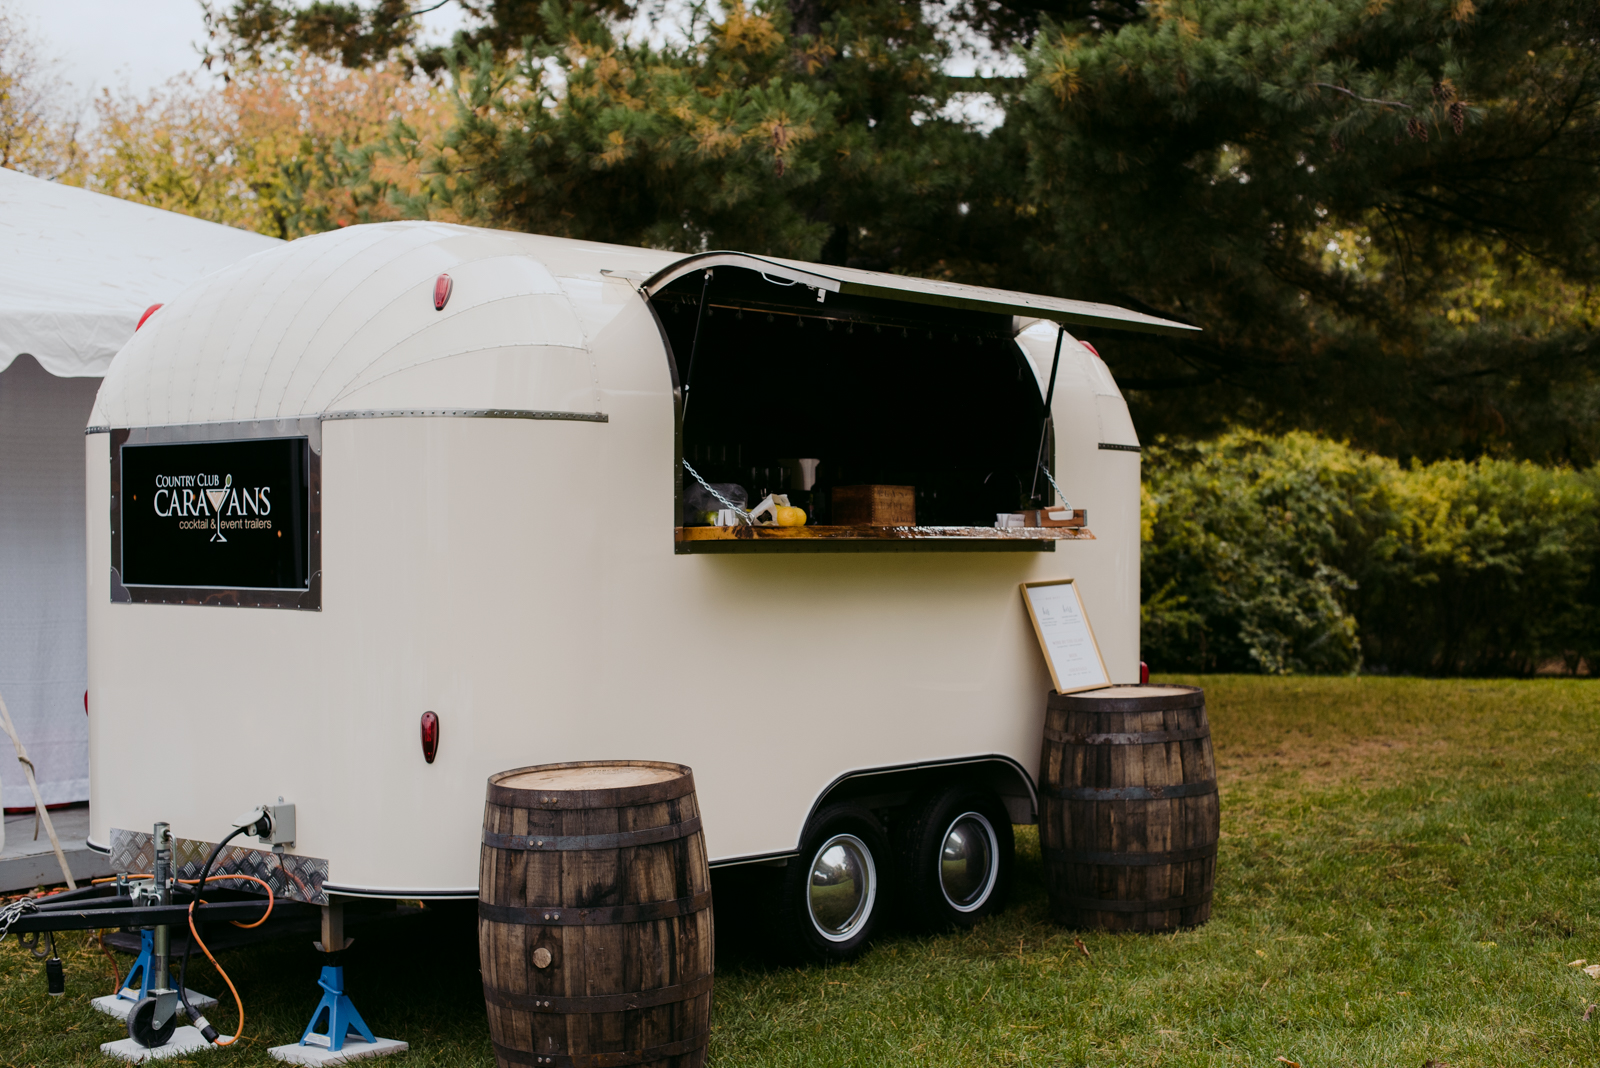 County caravan cocktail bar at outdoor wedding reception